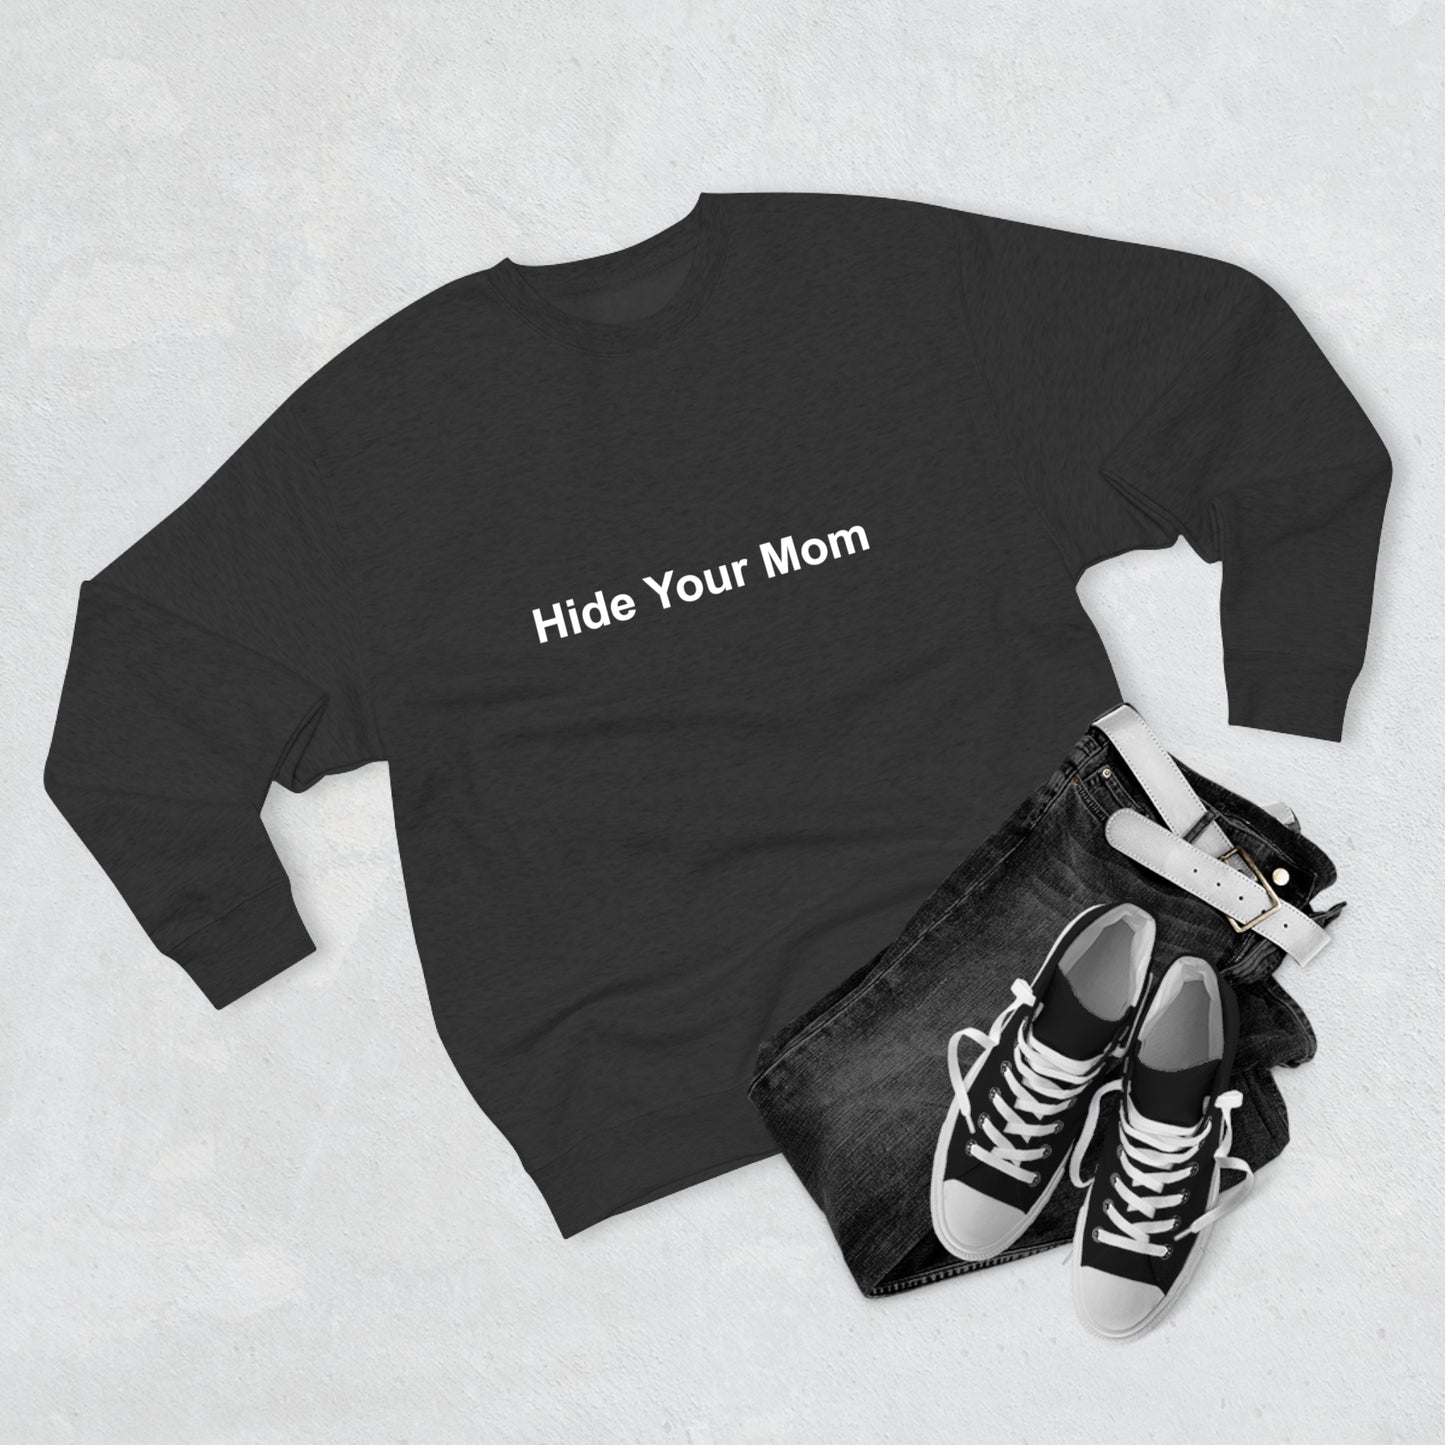 Hide Your Mom Unisex Premium Crewneck Sweatshirt